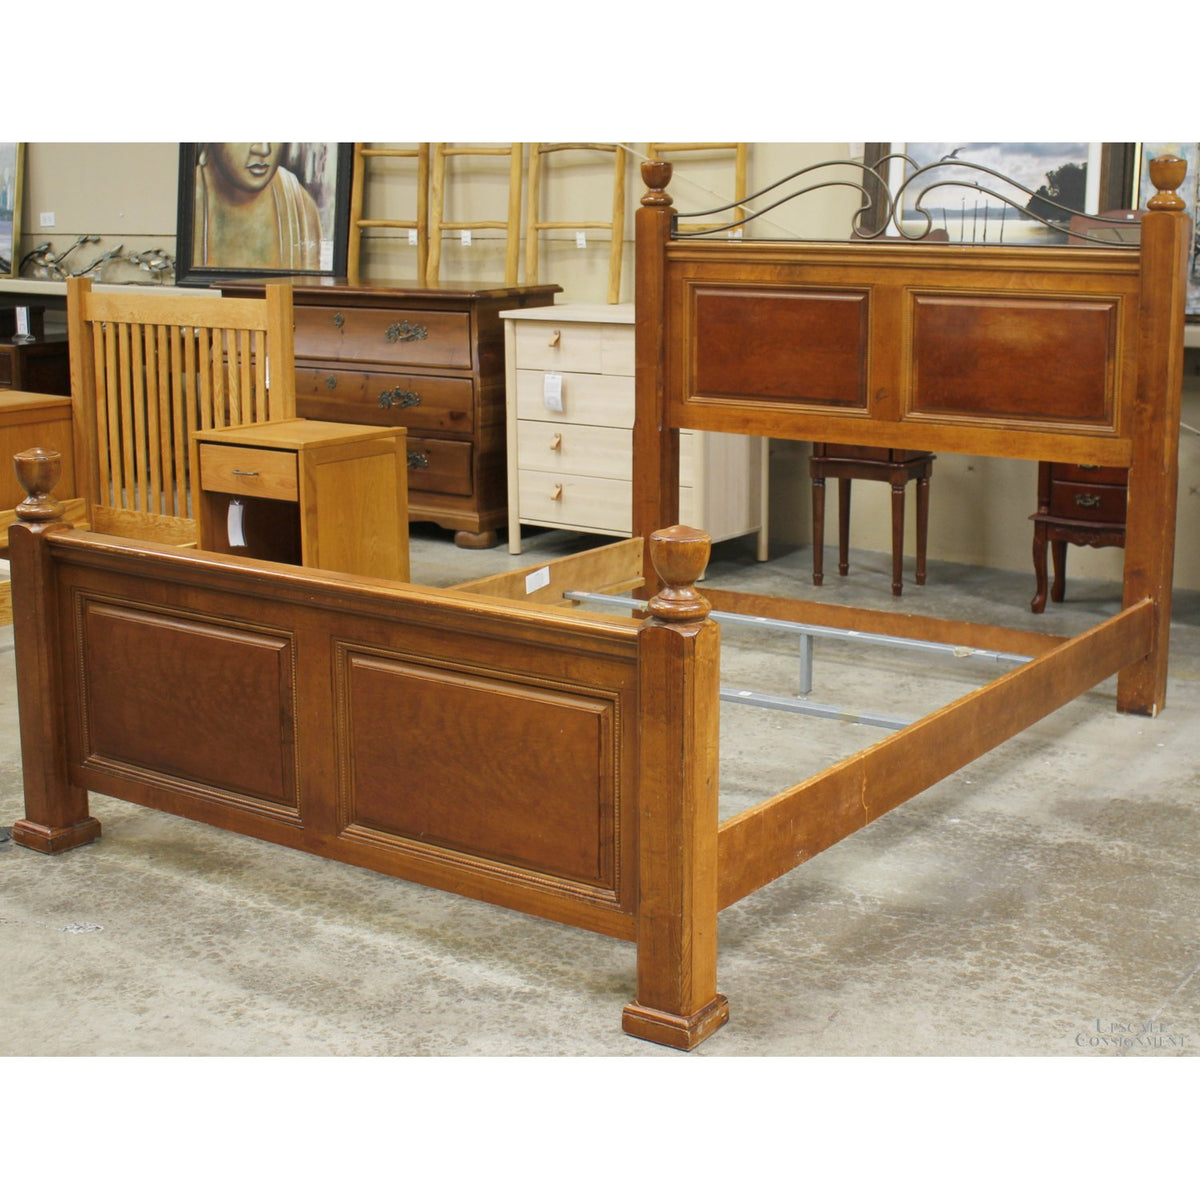 Vaughn Furniture Co. Queen Size Panel Bed